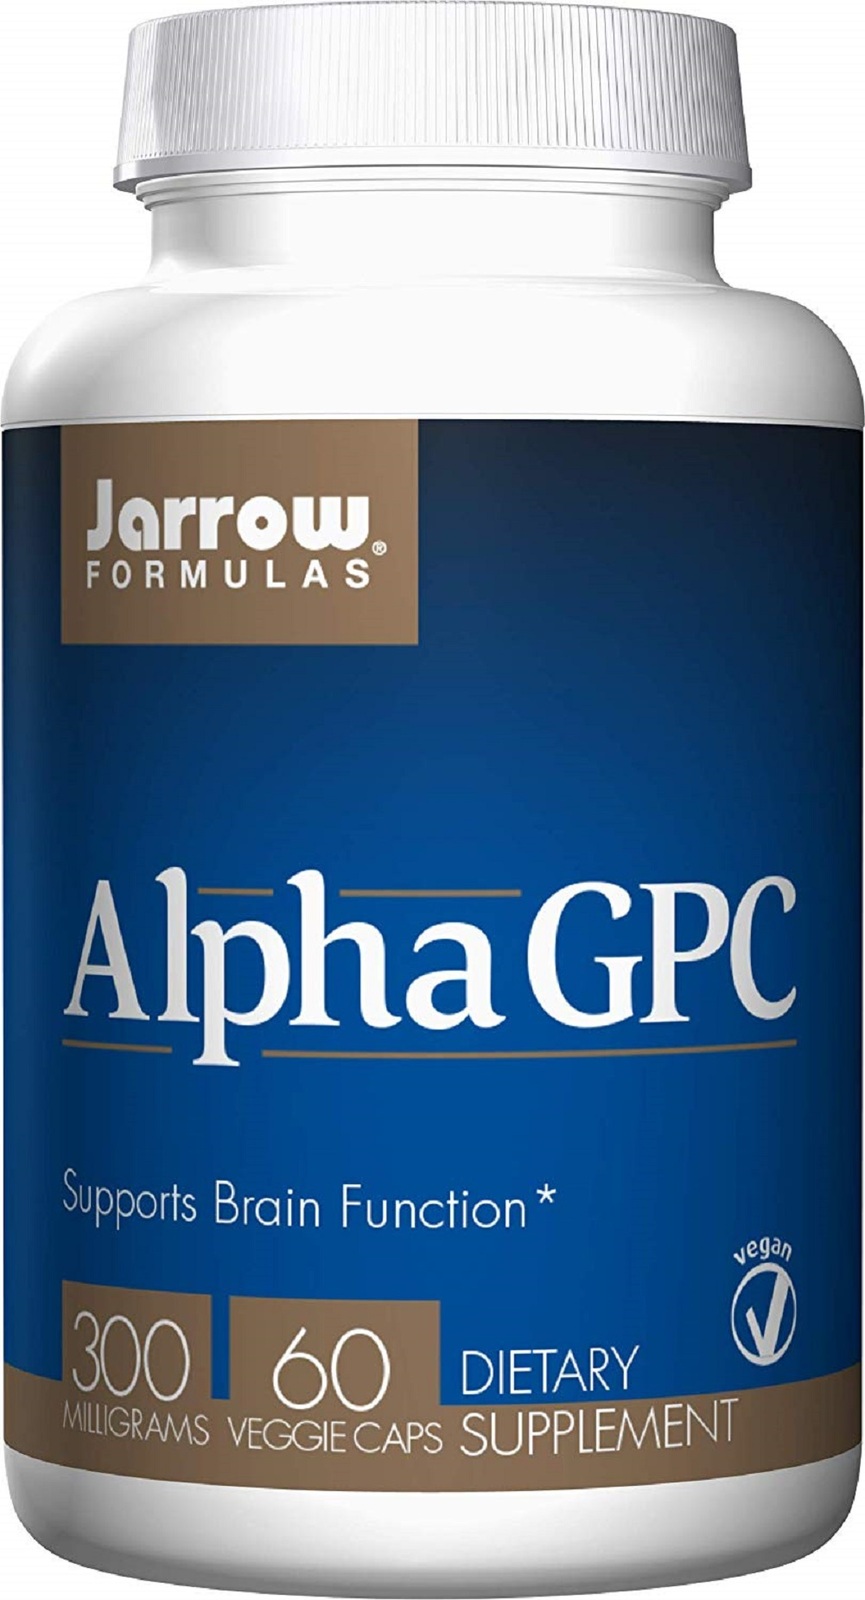 Jarrow Formulas Alpha GPC, Supports Brain Function, 300mg, 60 Veggie Caps